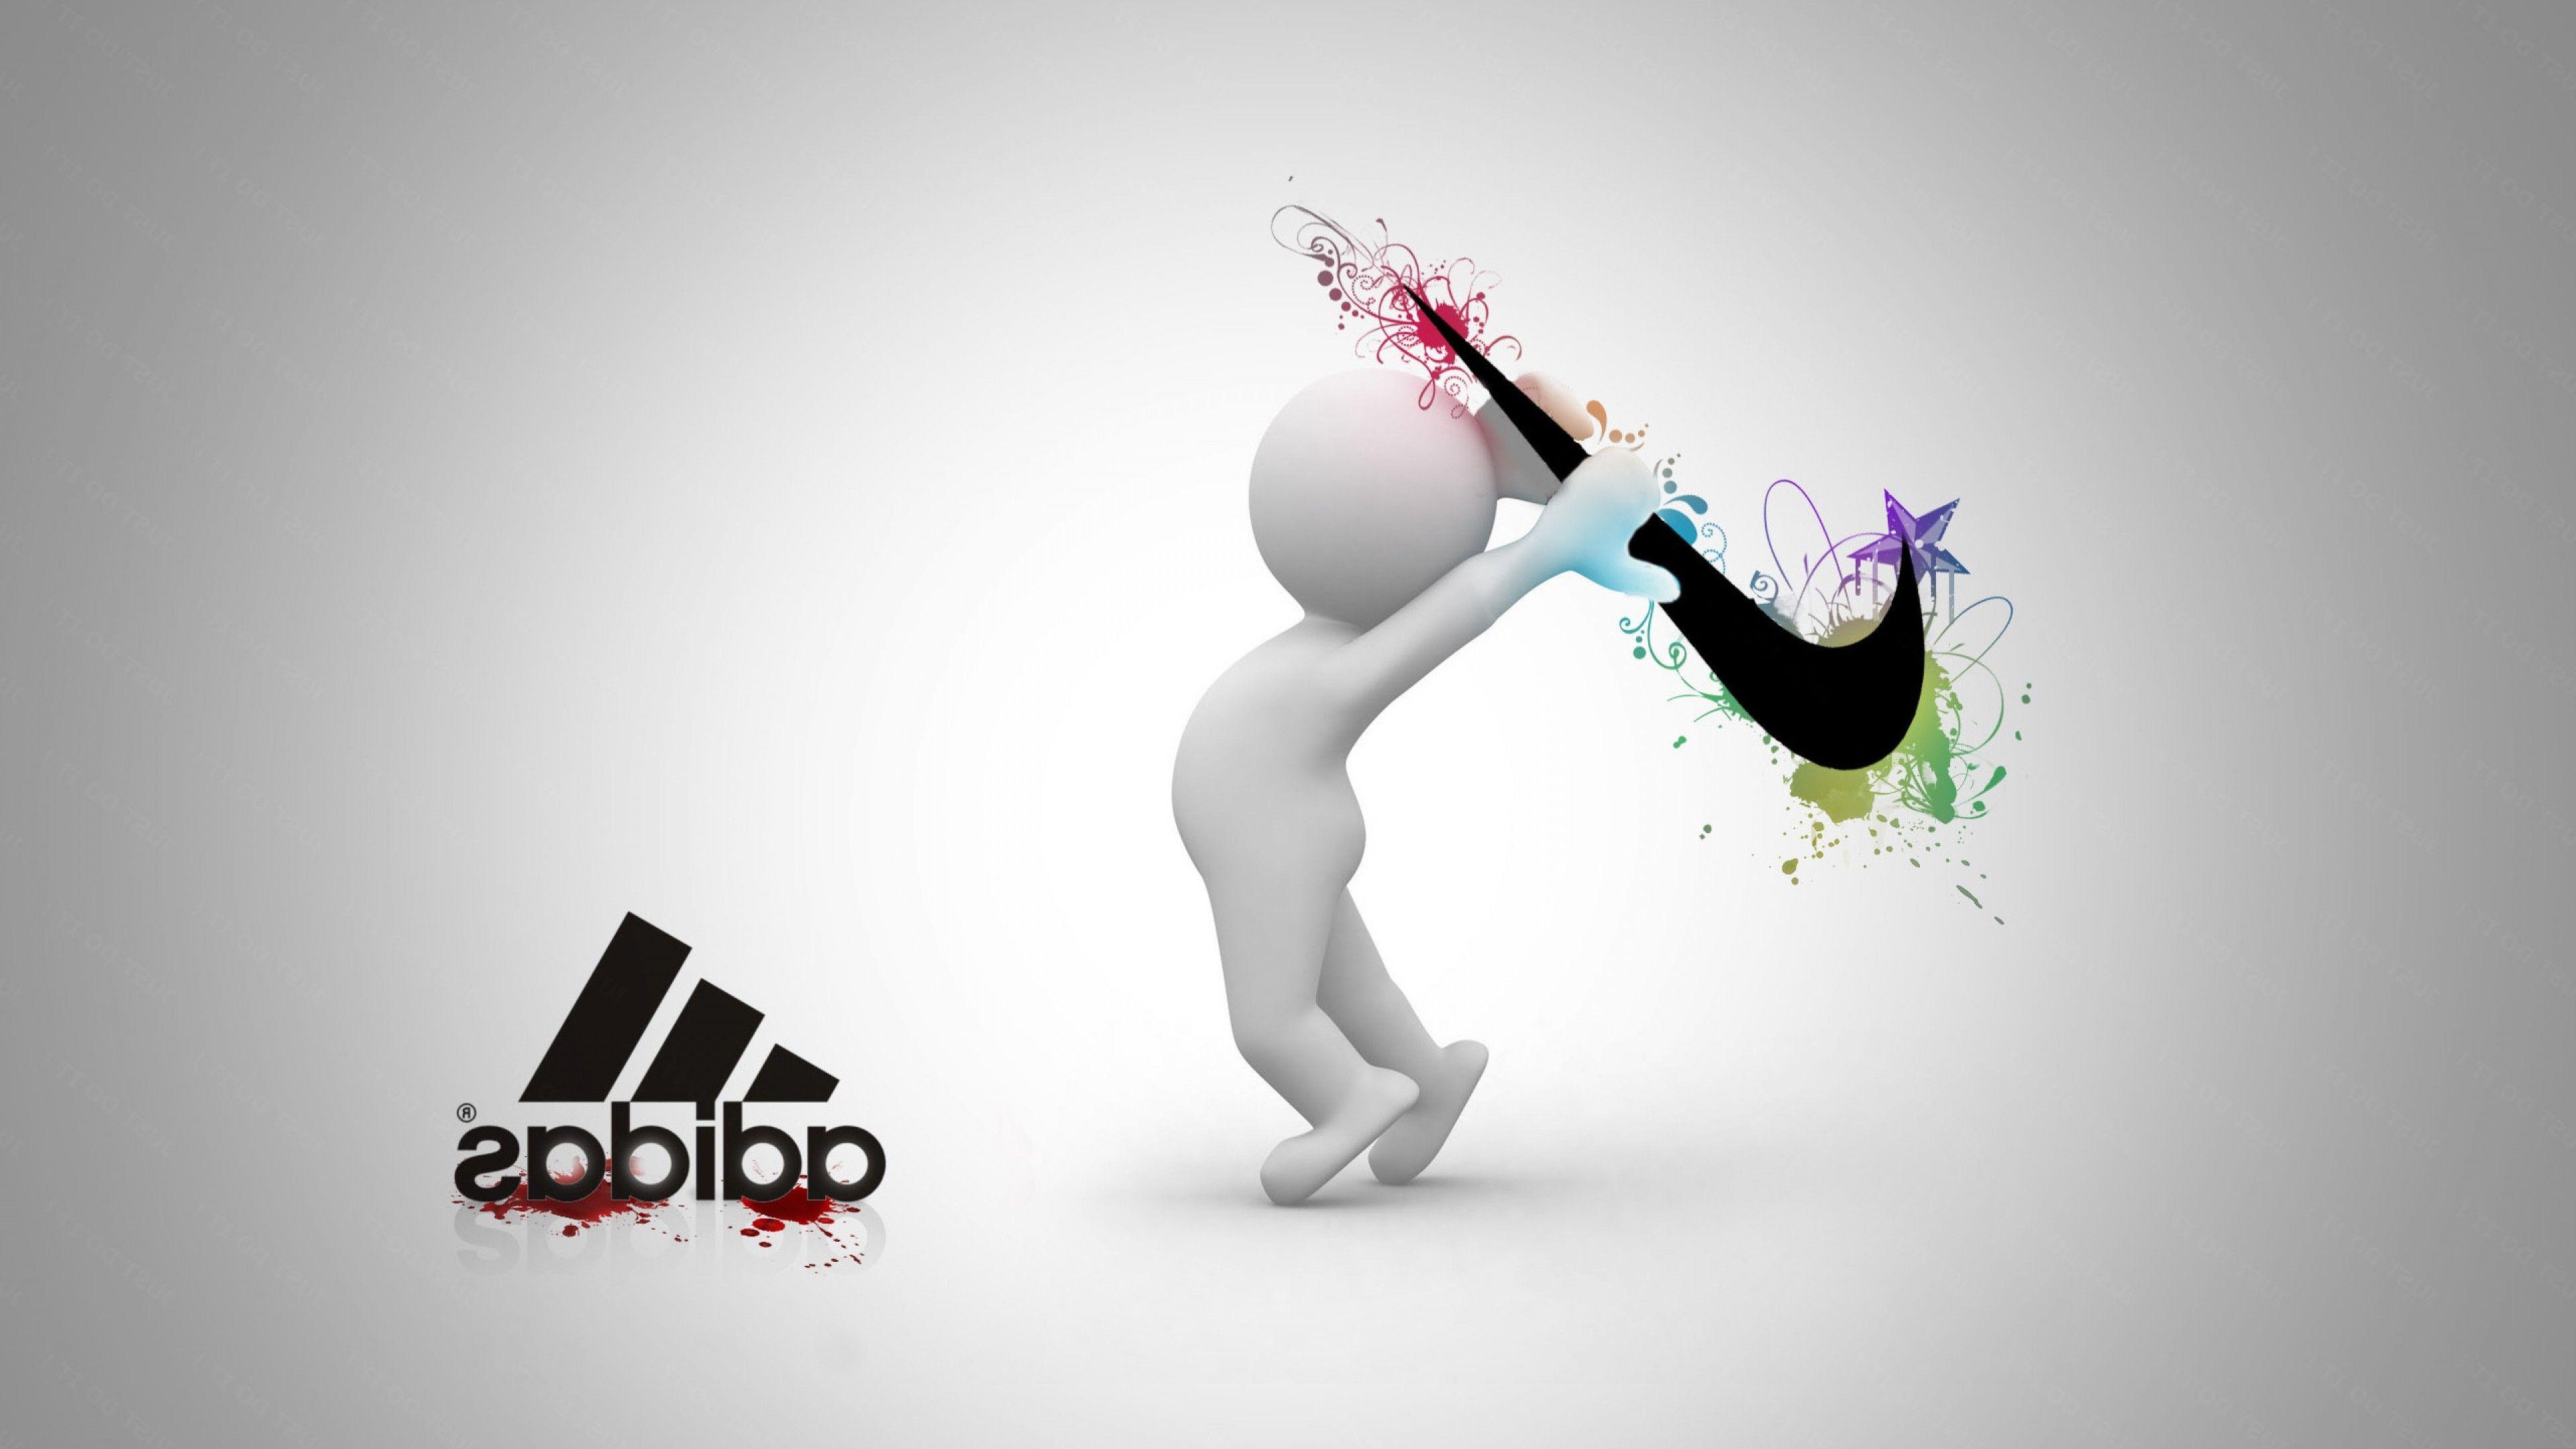 Nike and Adidas Logo - Nike vs Adidas, HD Logo, 4k Wallpapers, Images, Backgrounds, Photos ...